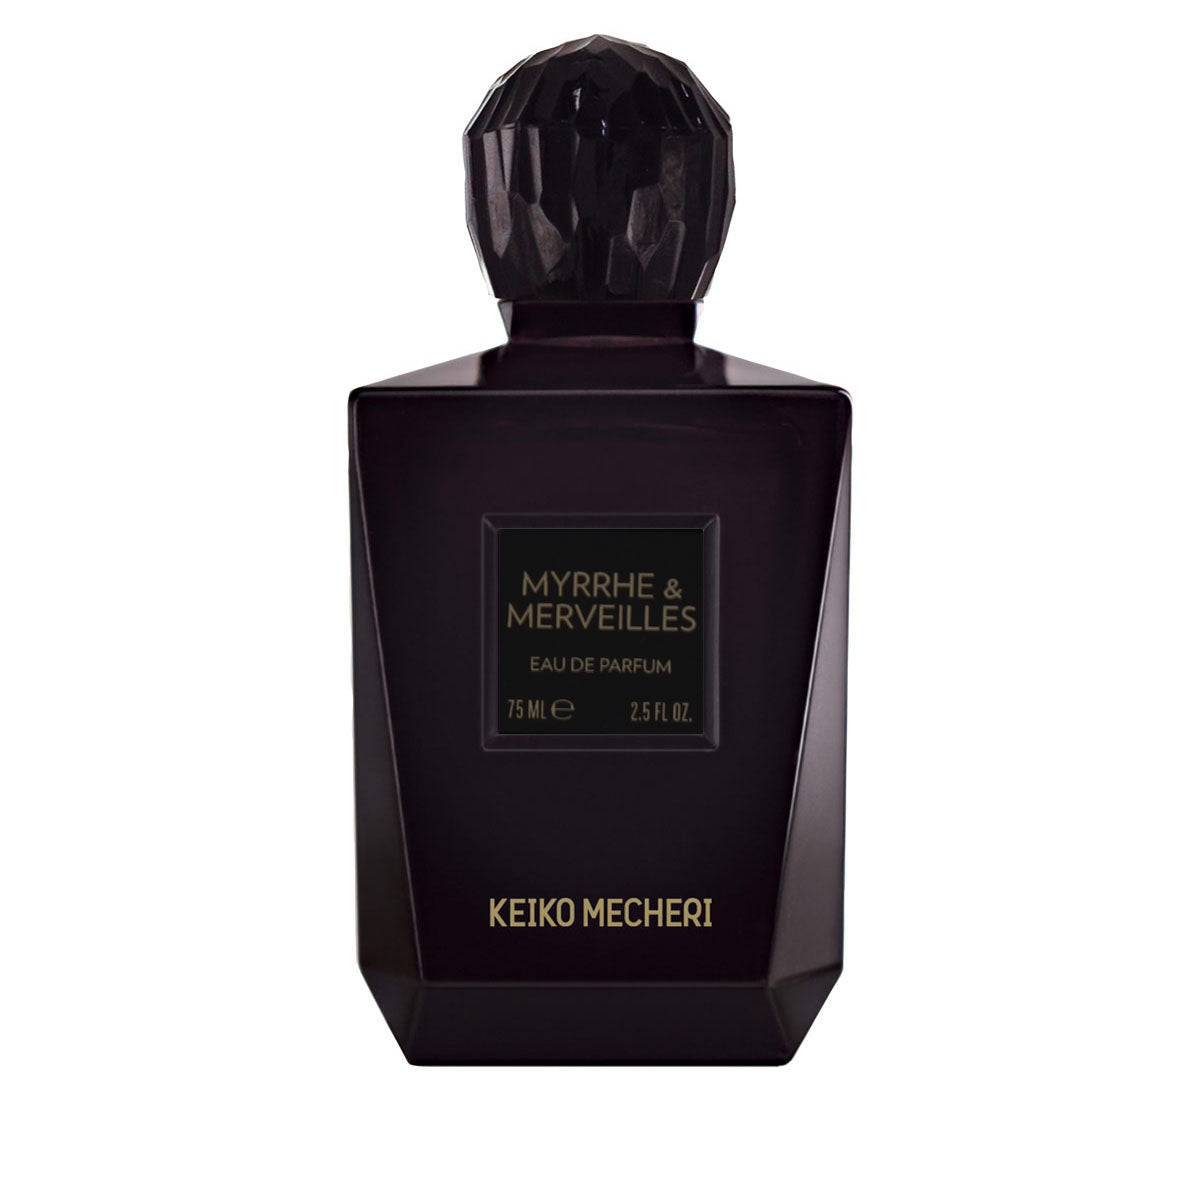 Myrrhe & Merveilles Eau De Parfum 75 ml